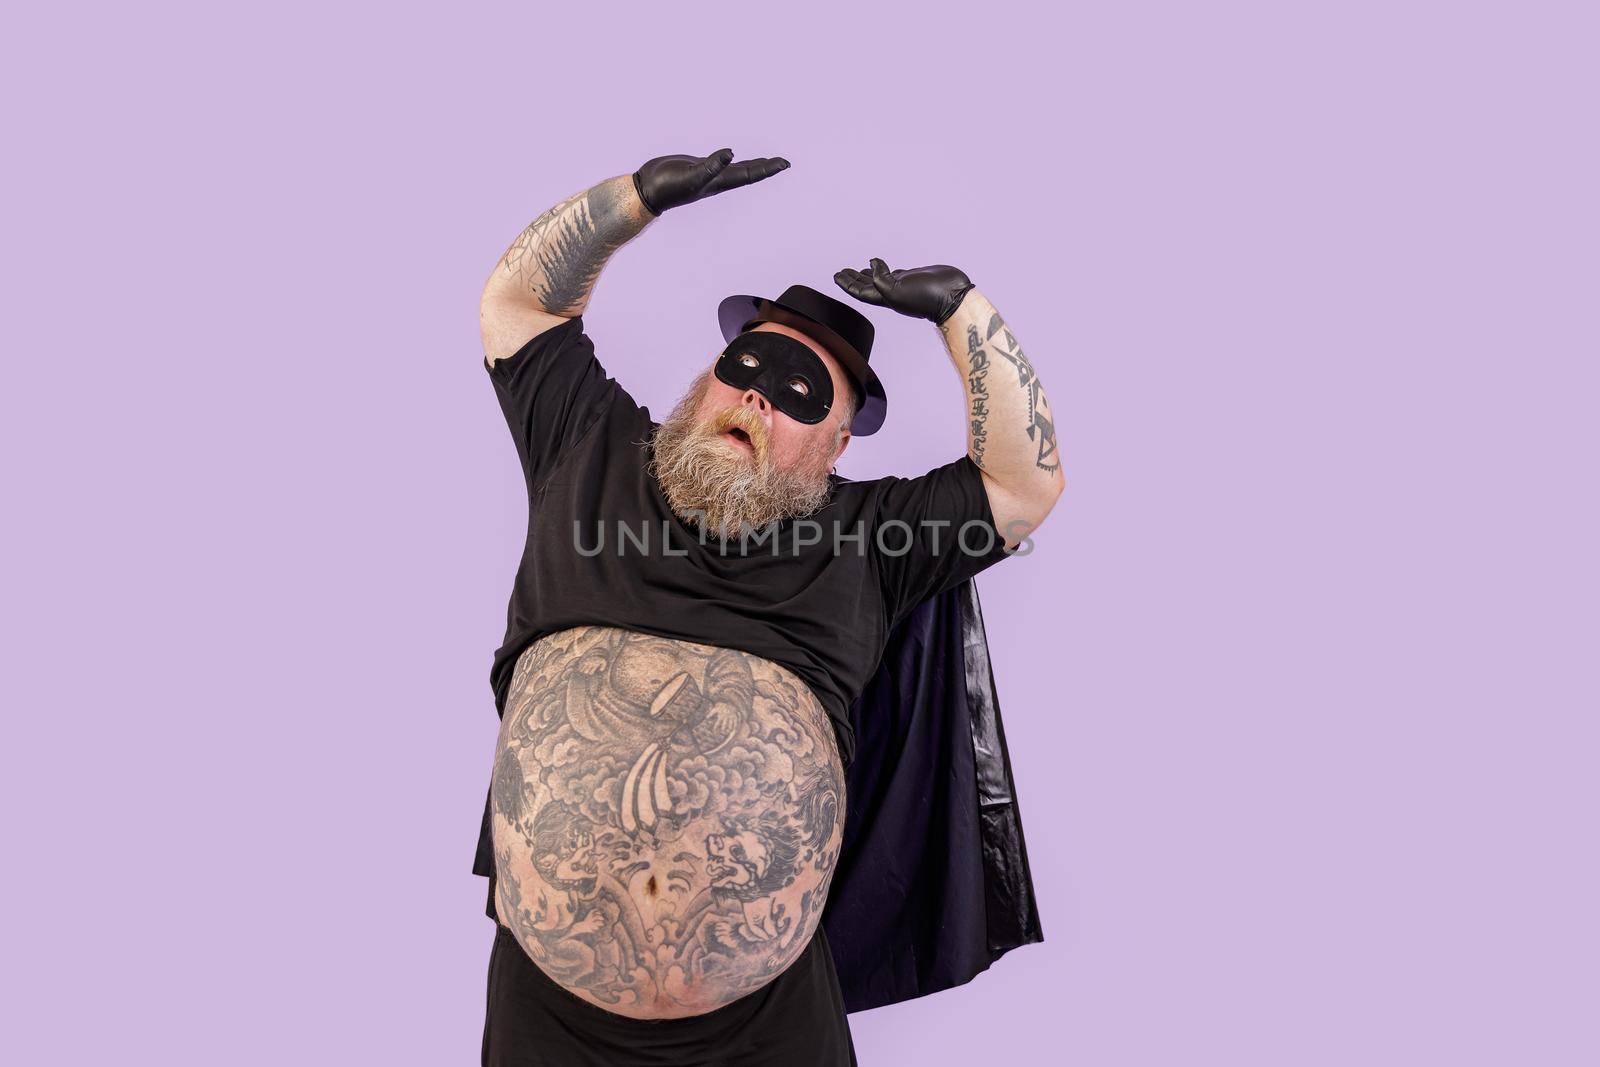 Doubting obese gentleman in hero costume covers himself from upper danger on purple background by Yaroslav_astakhov